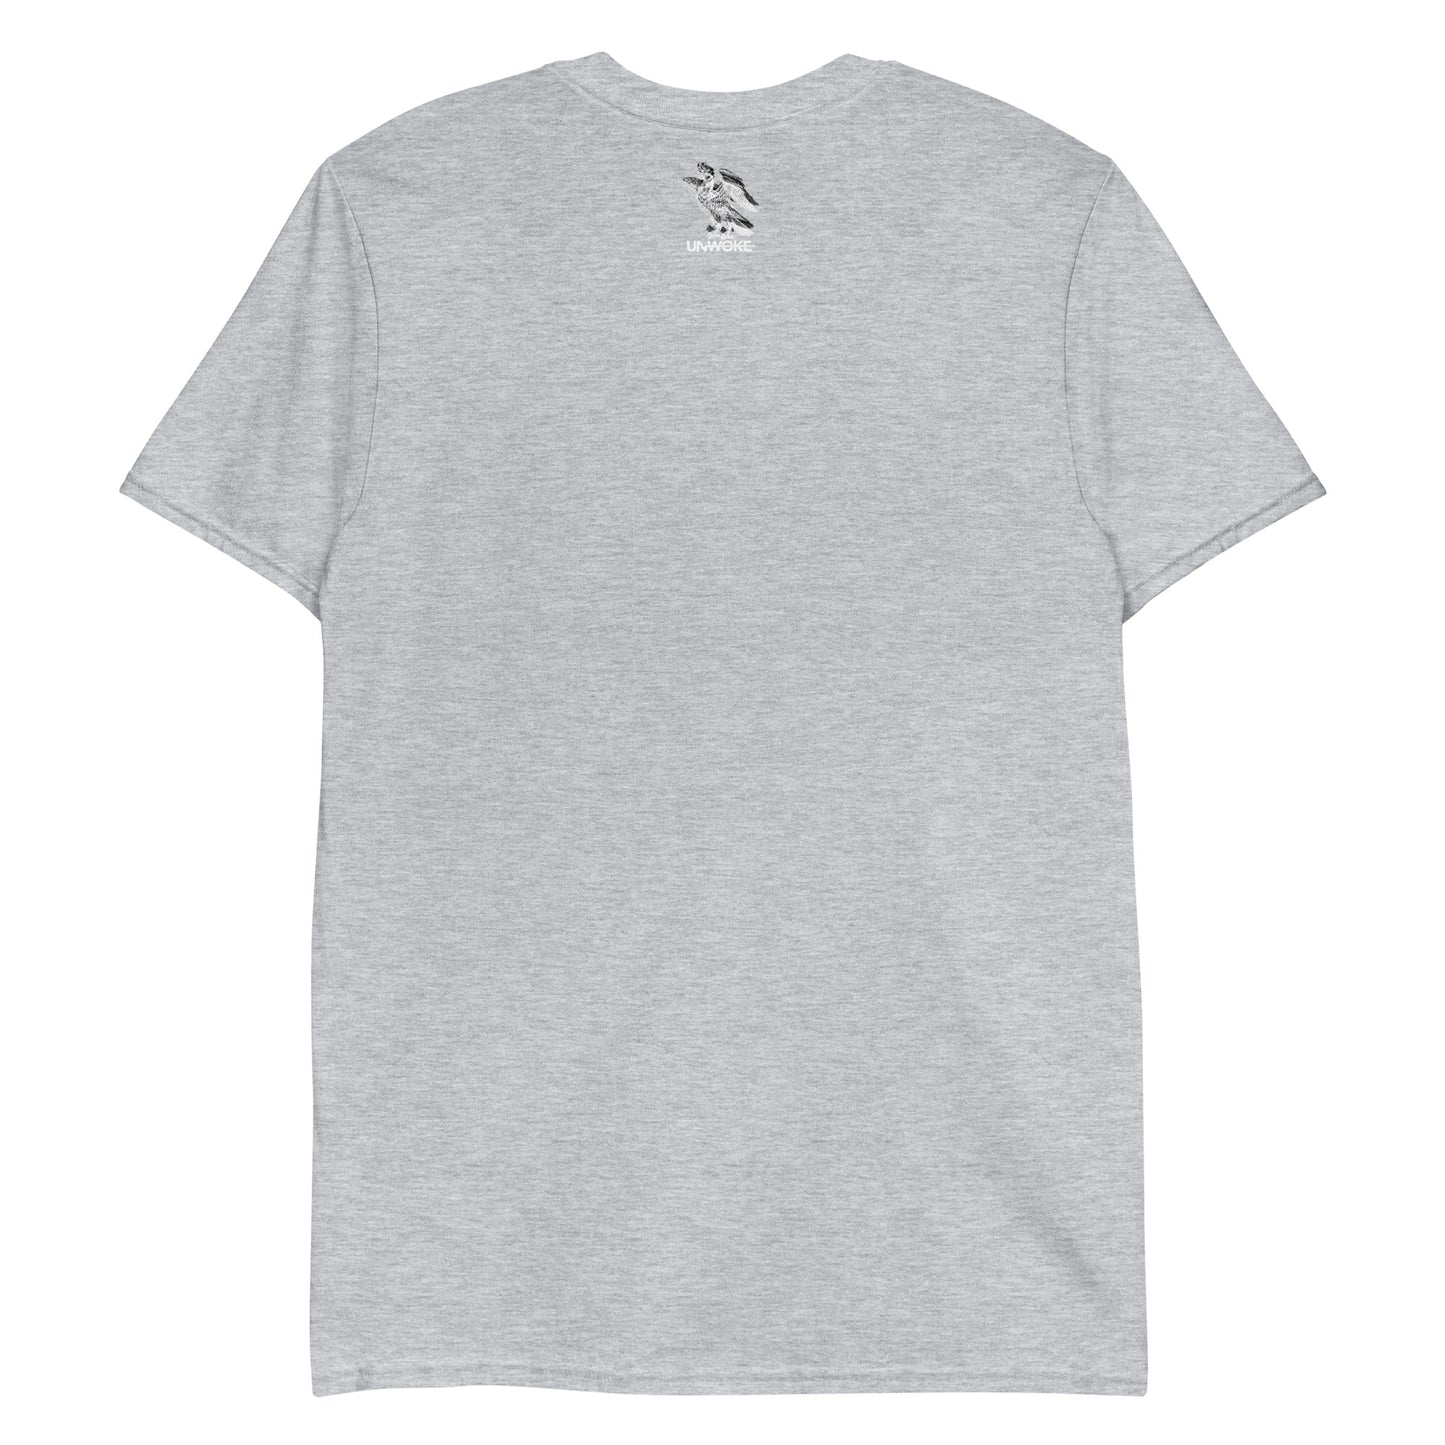 Unwoke Nation V2 Short-Sleeve Unisex T-Shirt- 3 Color Options